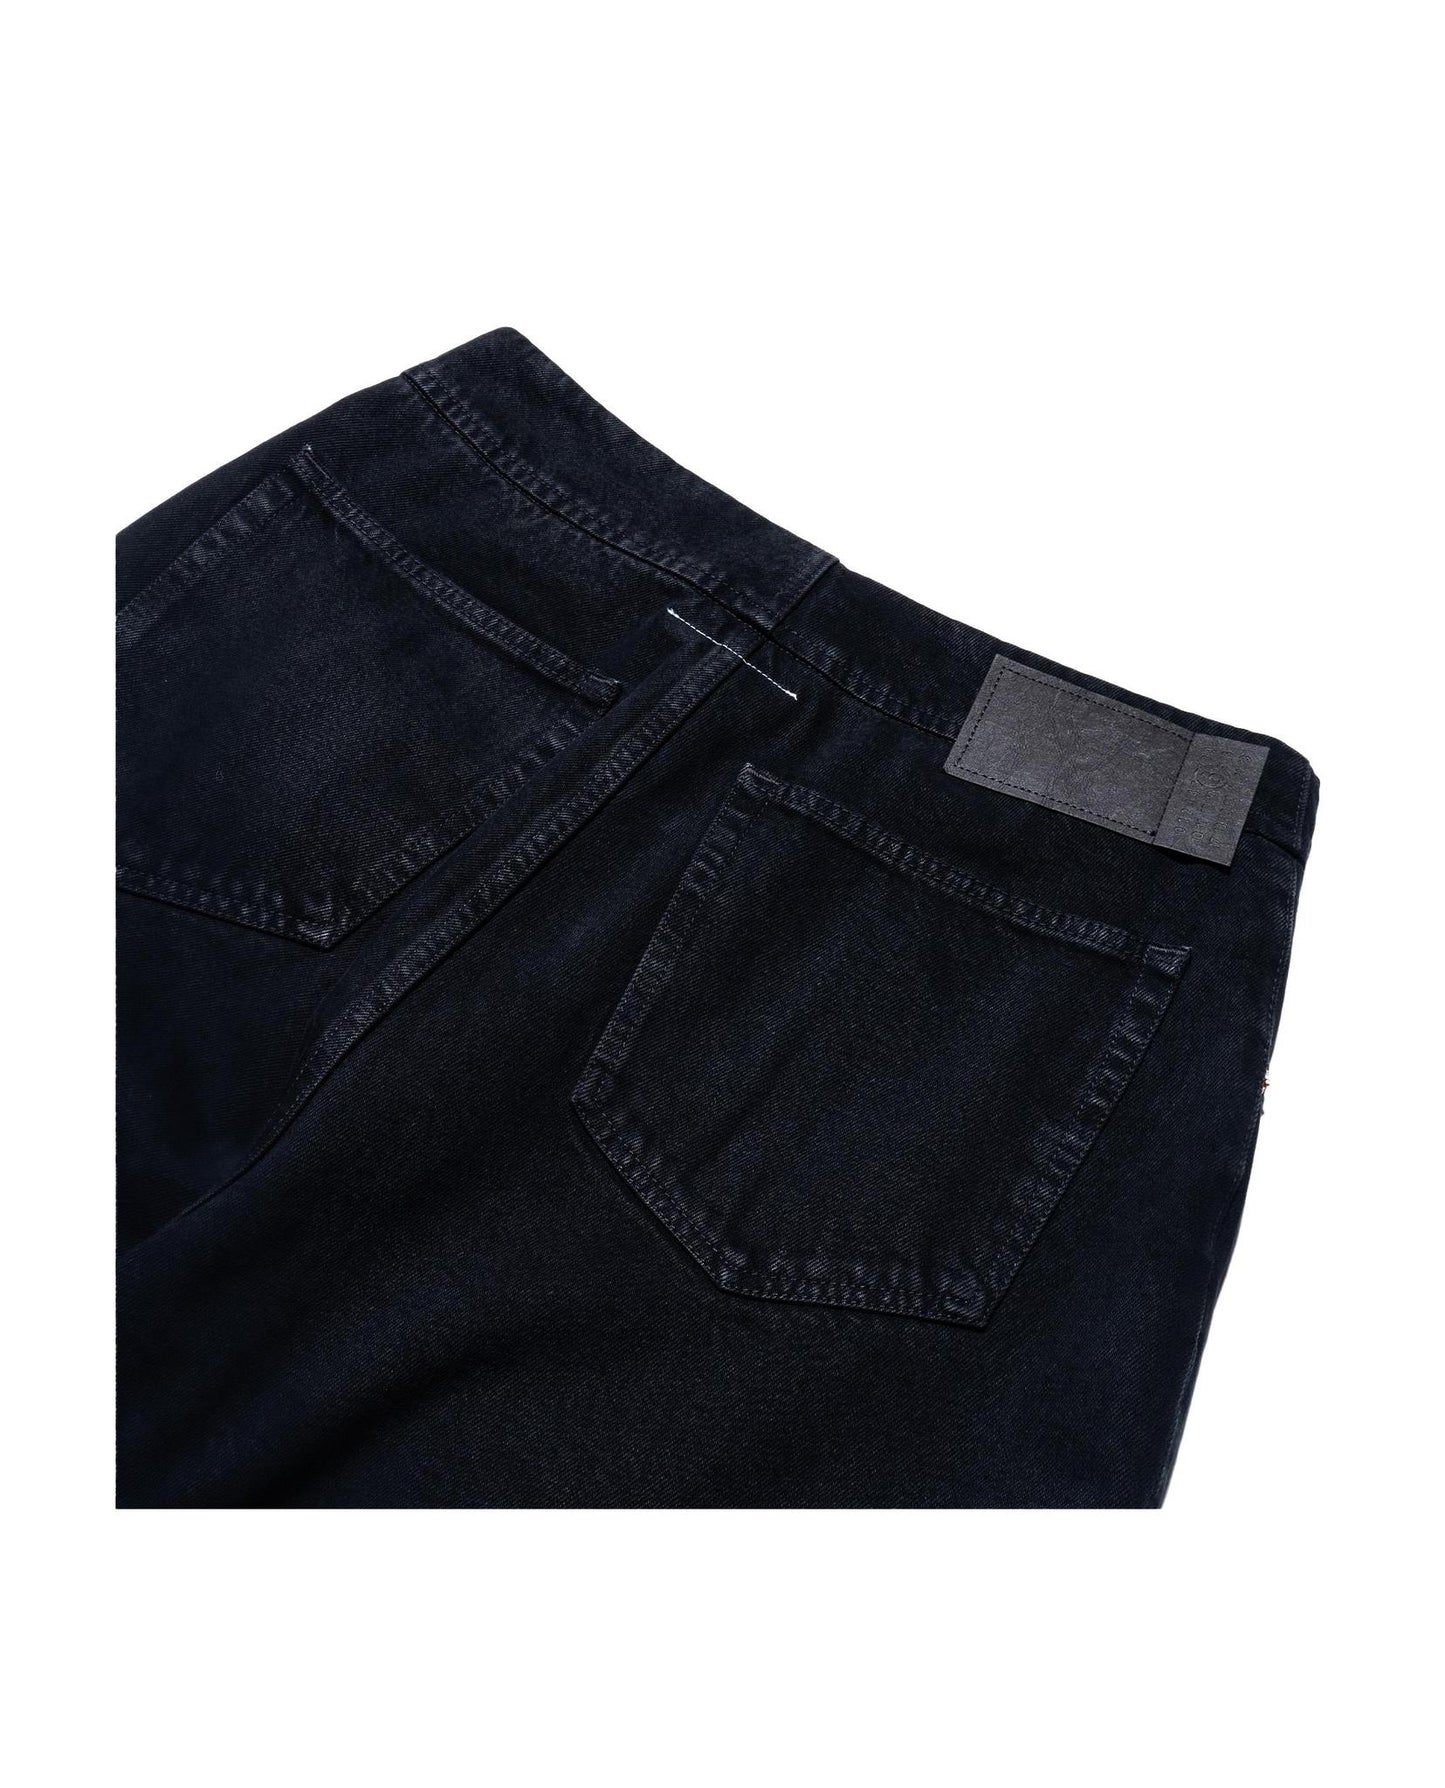 MM6 Maison Margiela Pants Five Pockets in Black Denim Regular